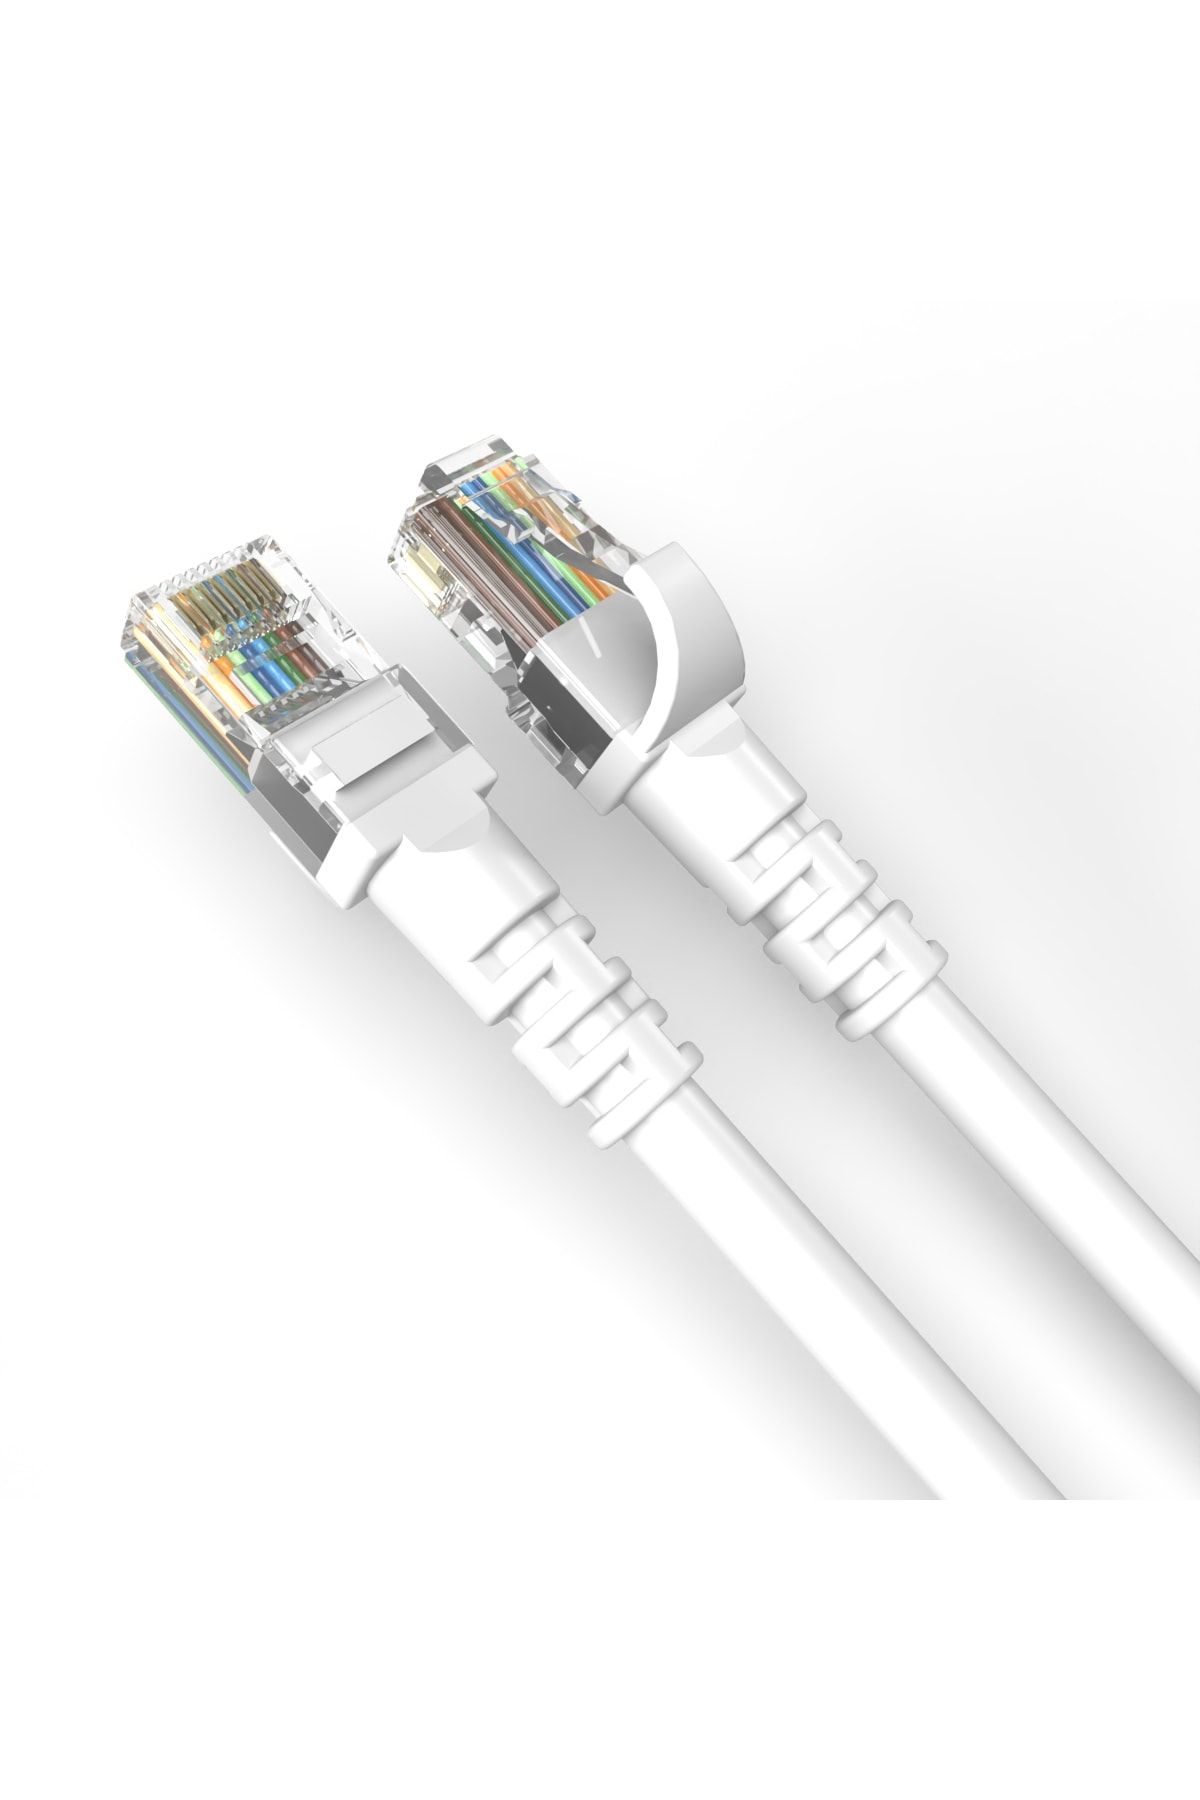 DERKAB 20 Cm-santimetre Cat6 Network-ağ-ethernet Kablosu 10'lu Paket Beyaz